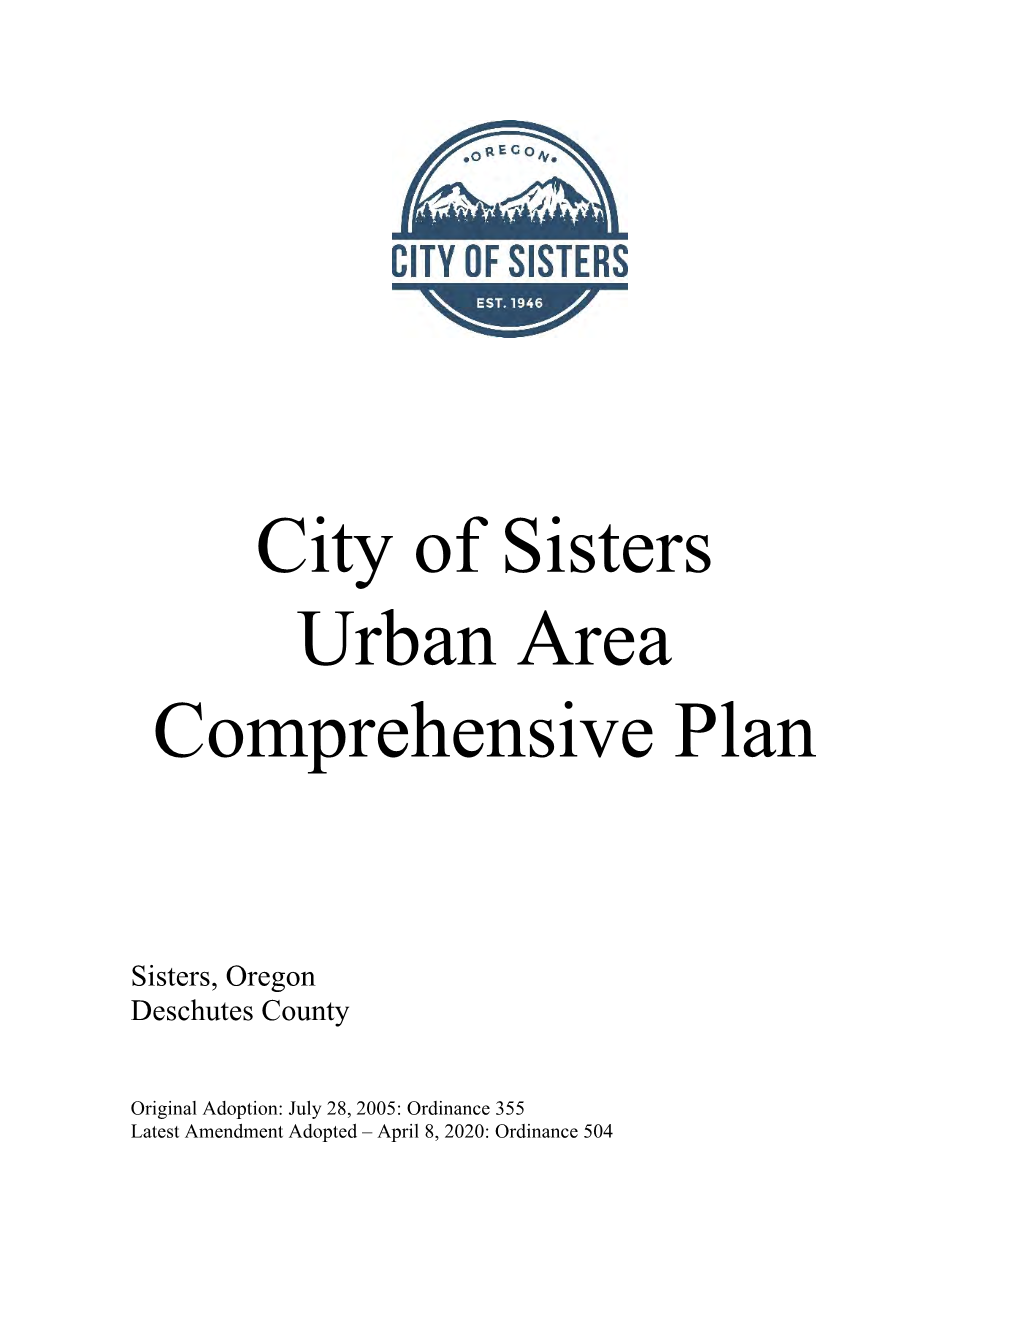 City of Sisters Urban Area Comprehensive Plan